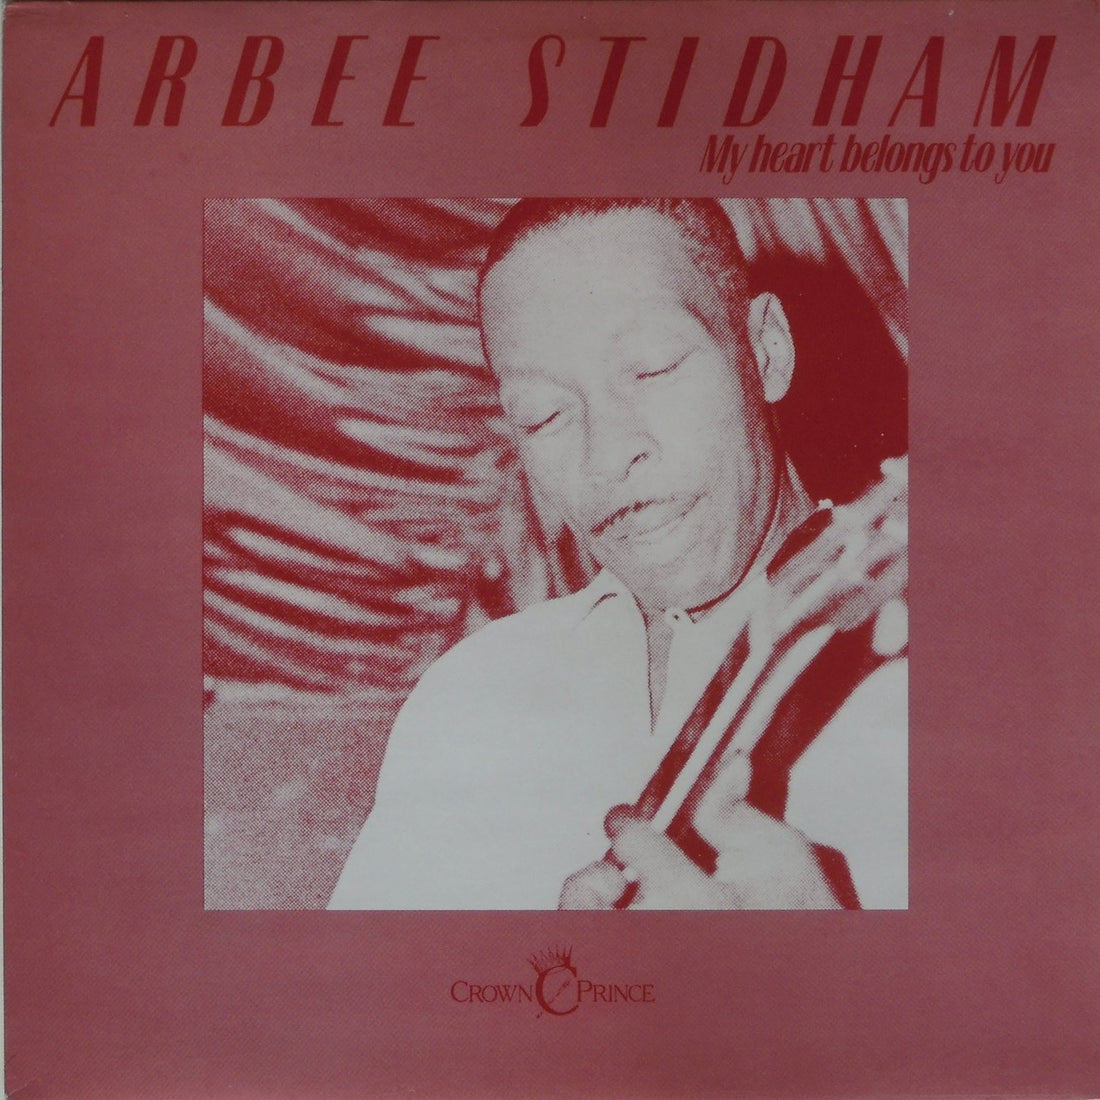 Arbee Stidham- My Heart Belongs to You